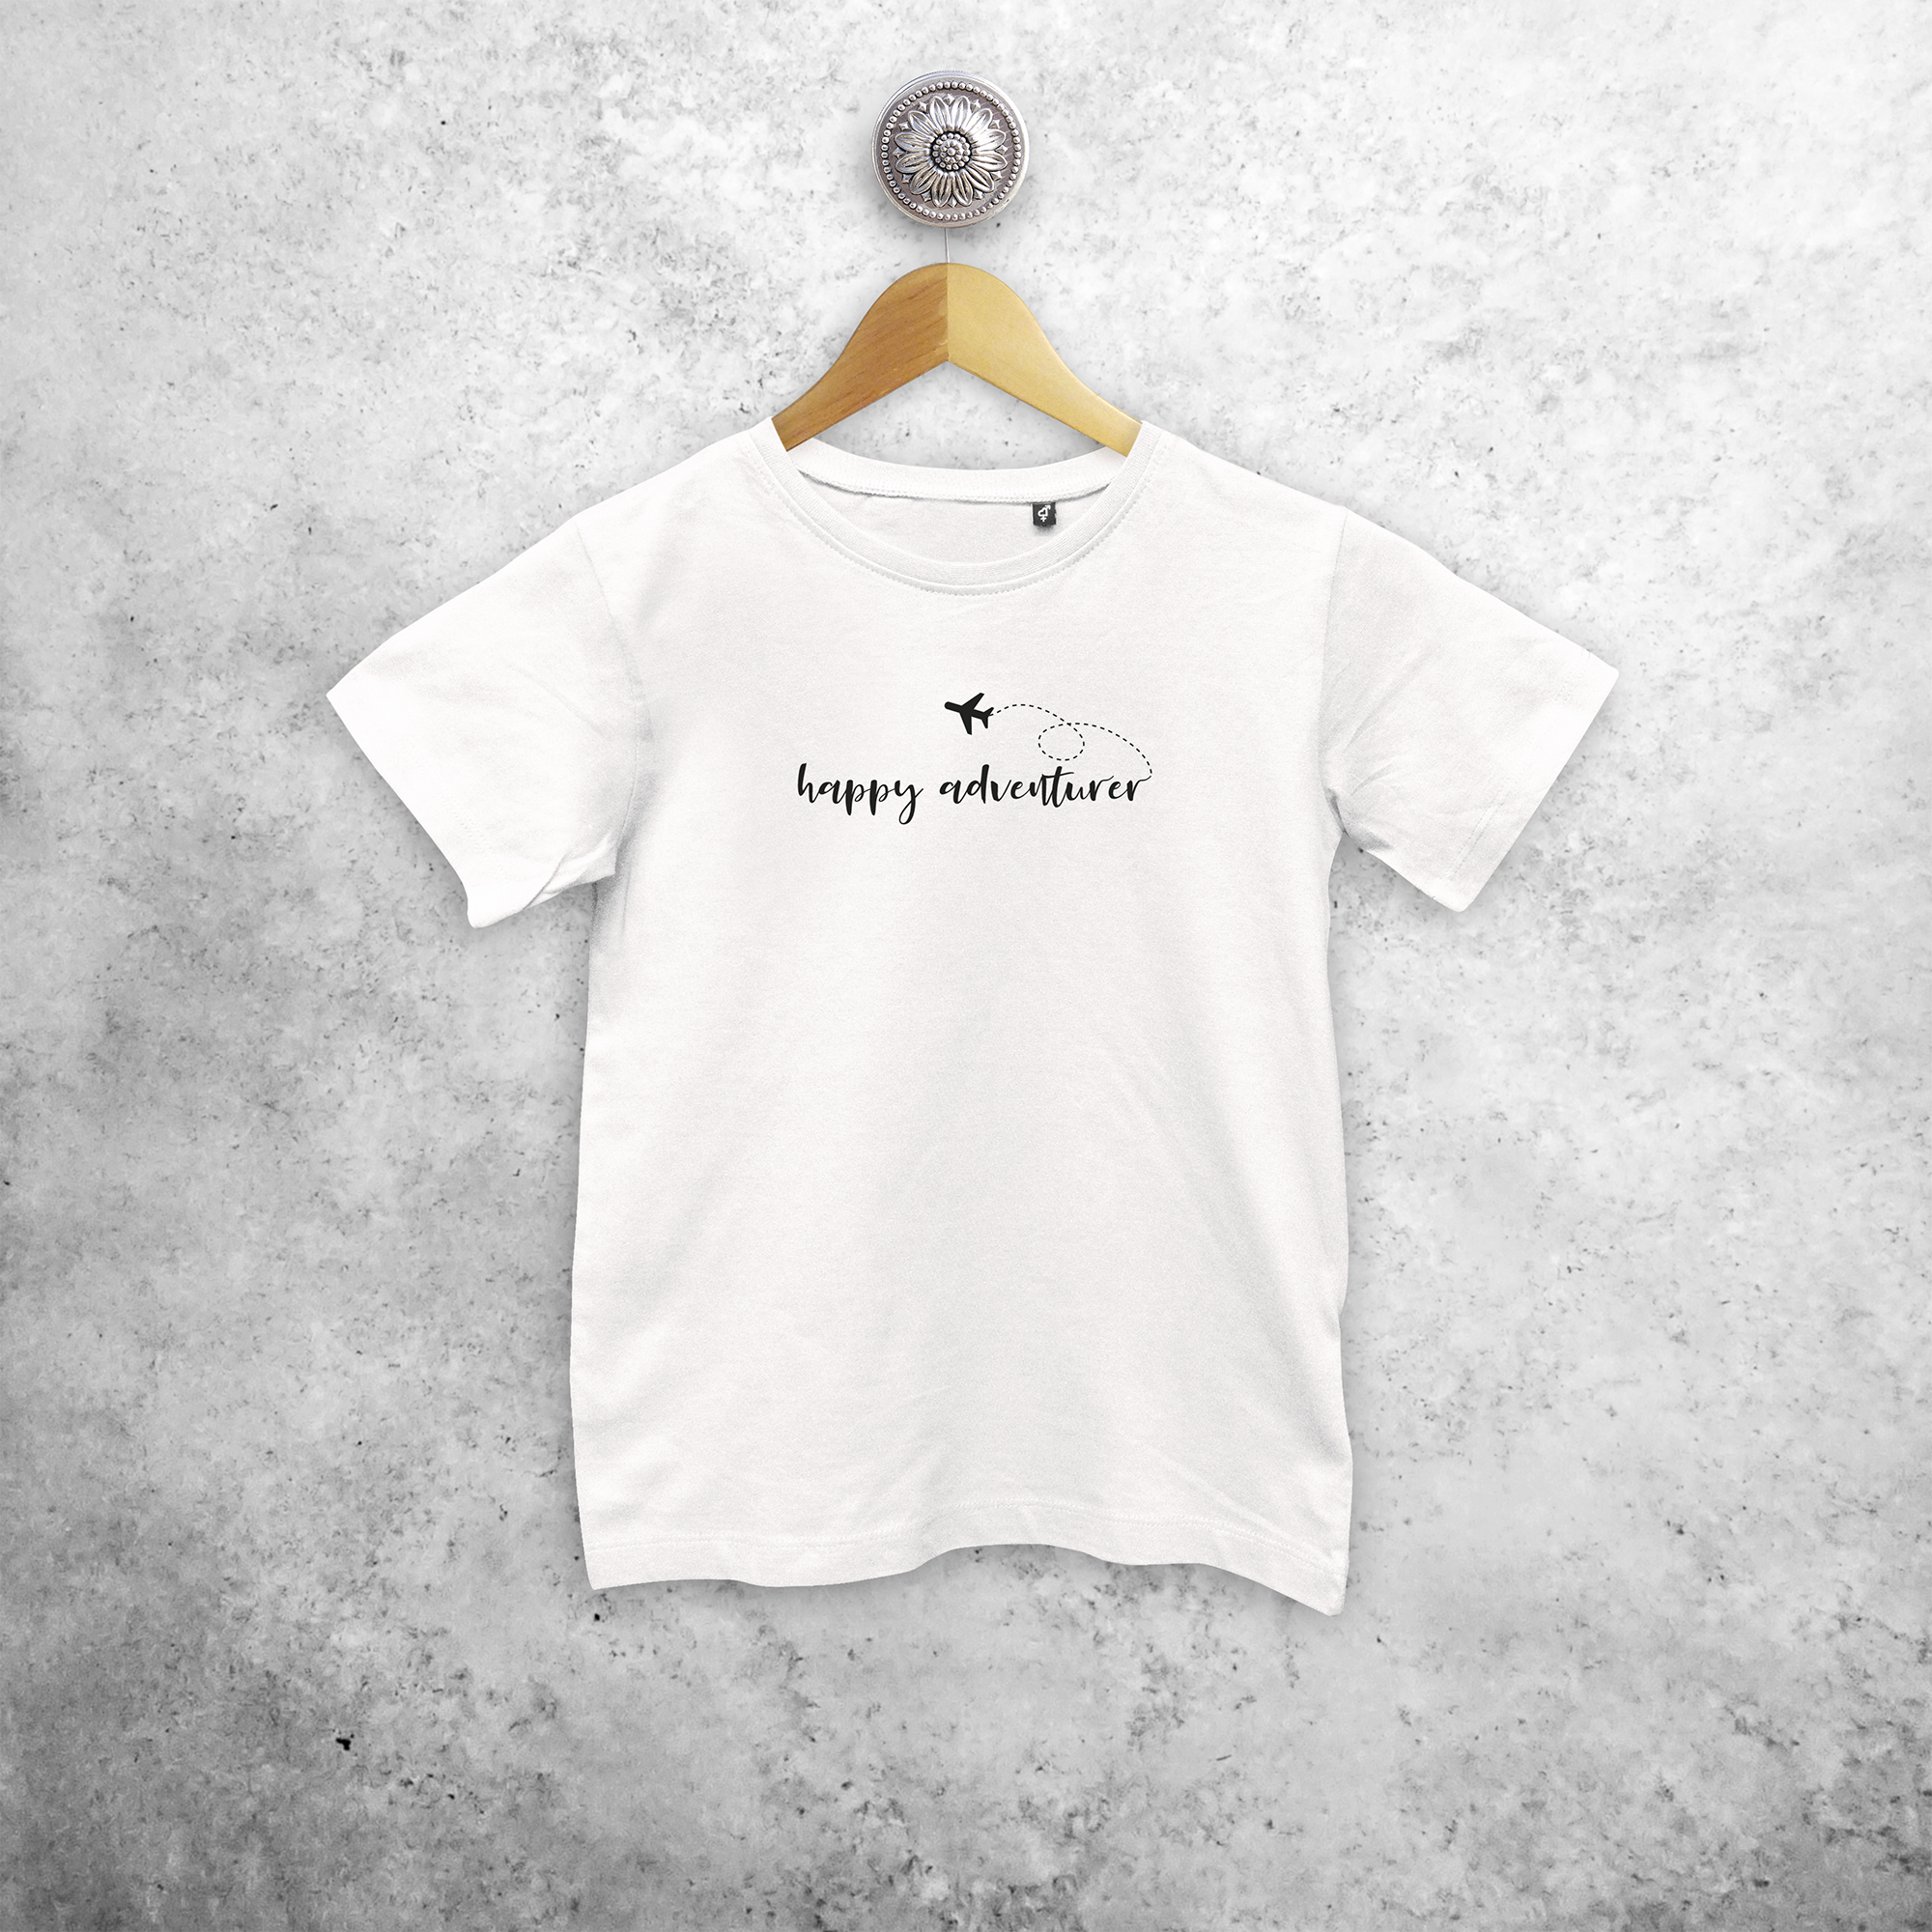 'Happy adventurer' kids shortsleeve shirt